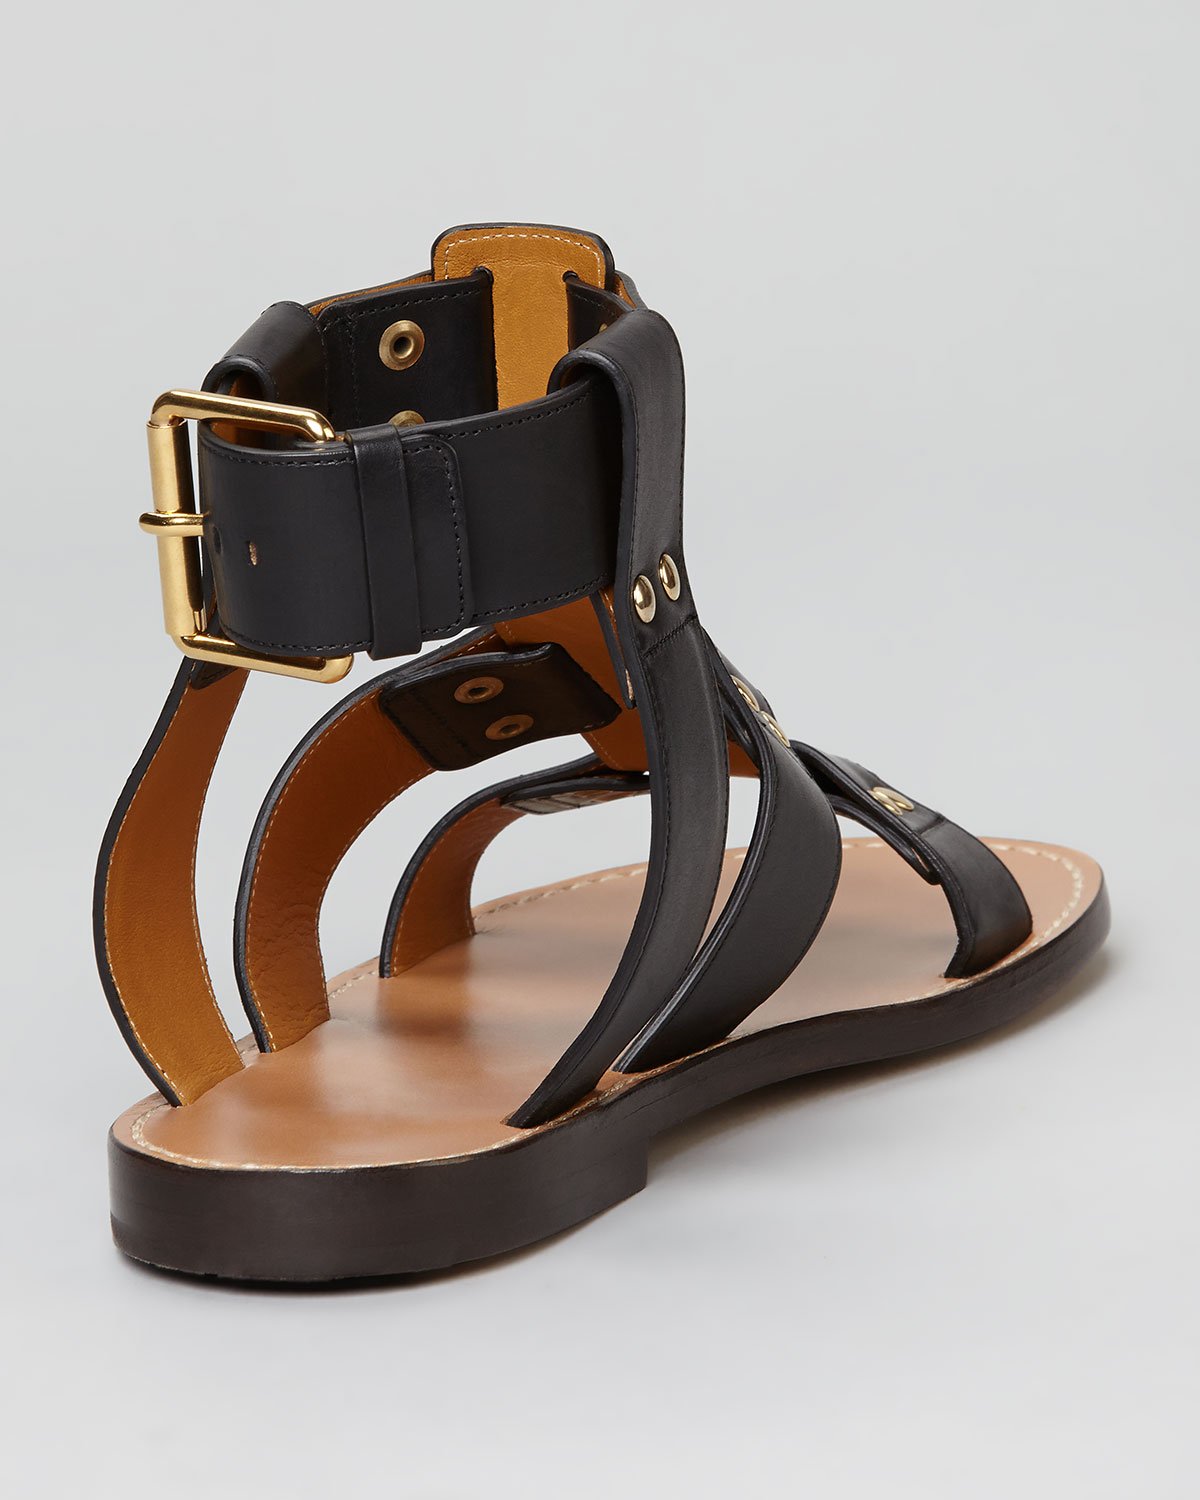 Lyst - Chloé Flat Studded Leather Sandal in Black